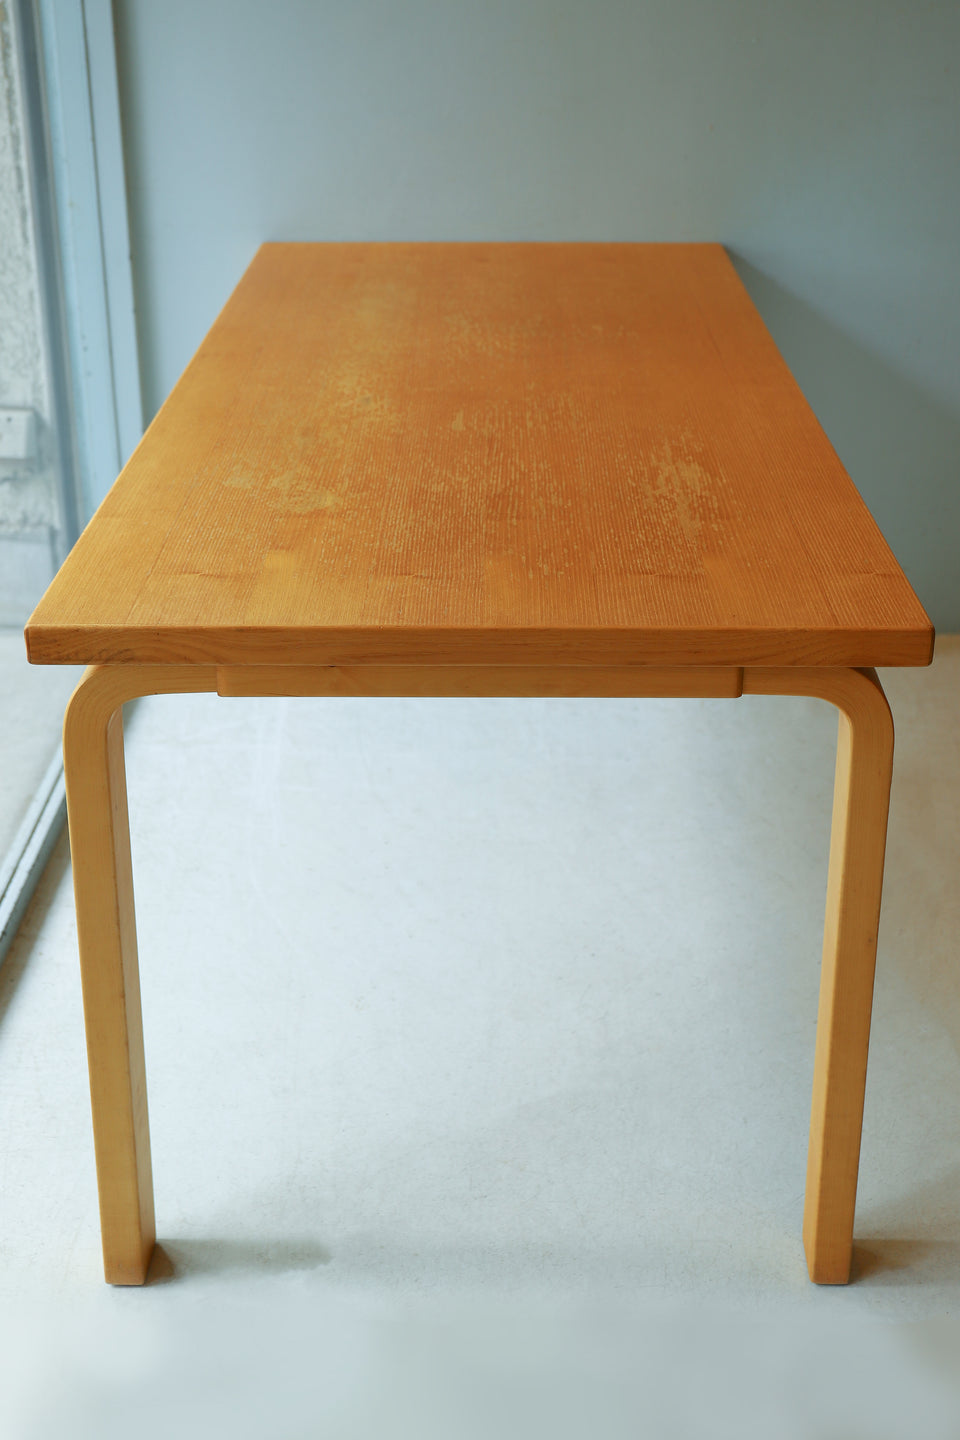 artek Dining Table 81A Ash Alvar Aalto/アルテック ダイニングテーブル アッシュ アルヴァ・アアルト